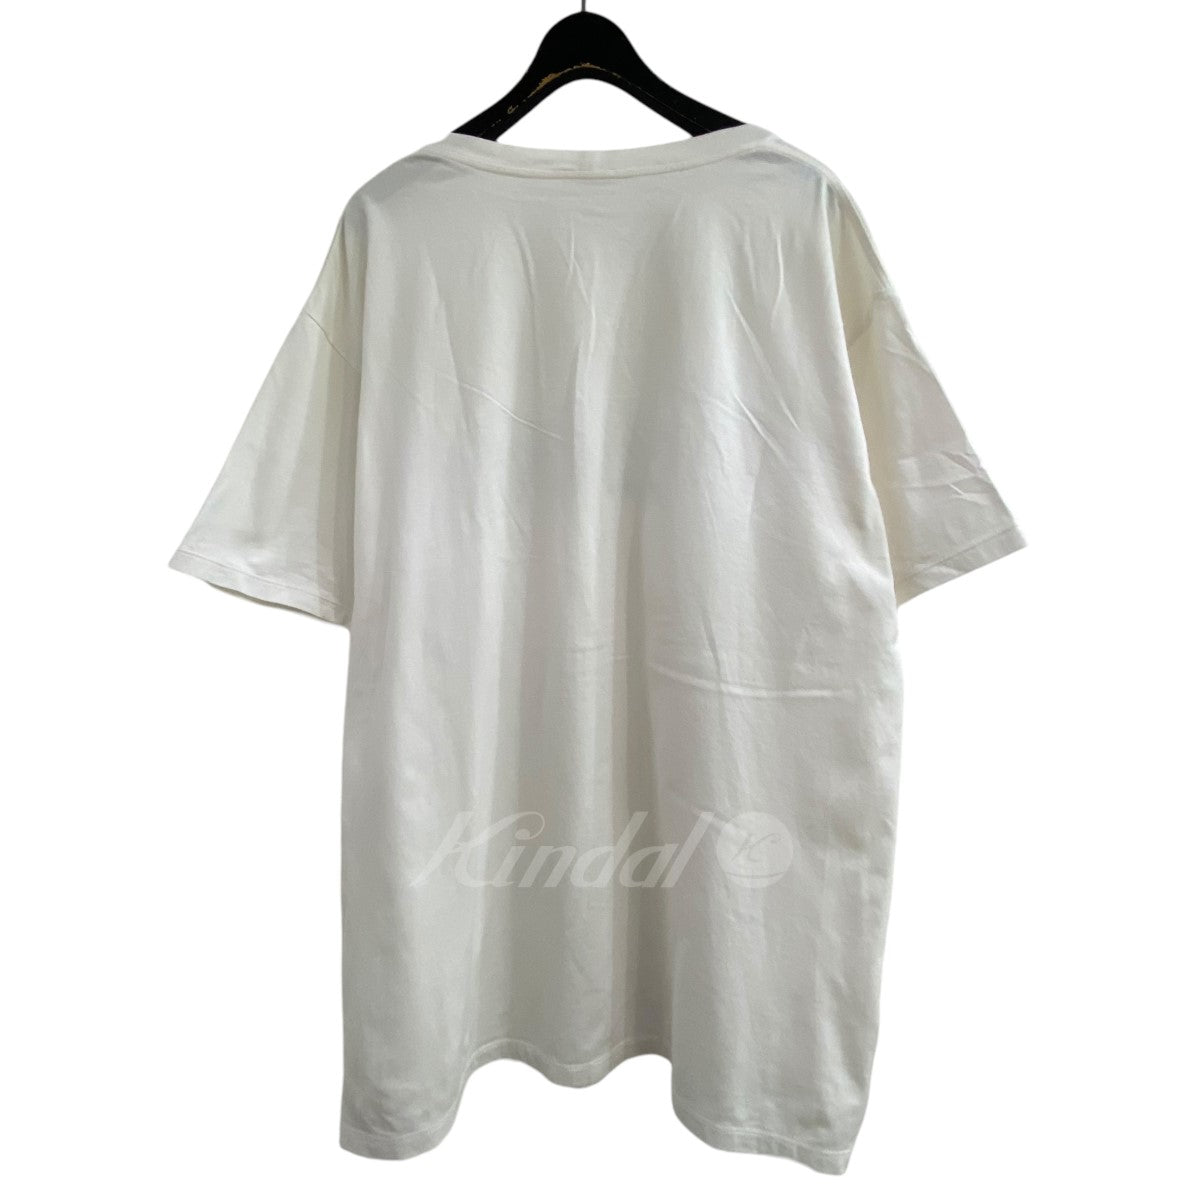 CELINE(セリーヌ) 22SS スタッズロゴTシャツ 2X50C671Q ホワイト 